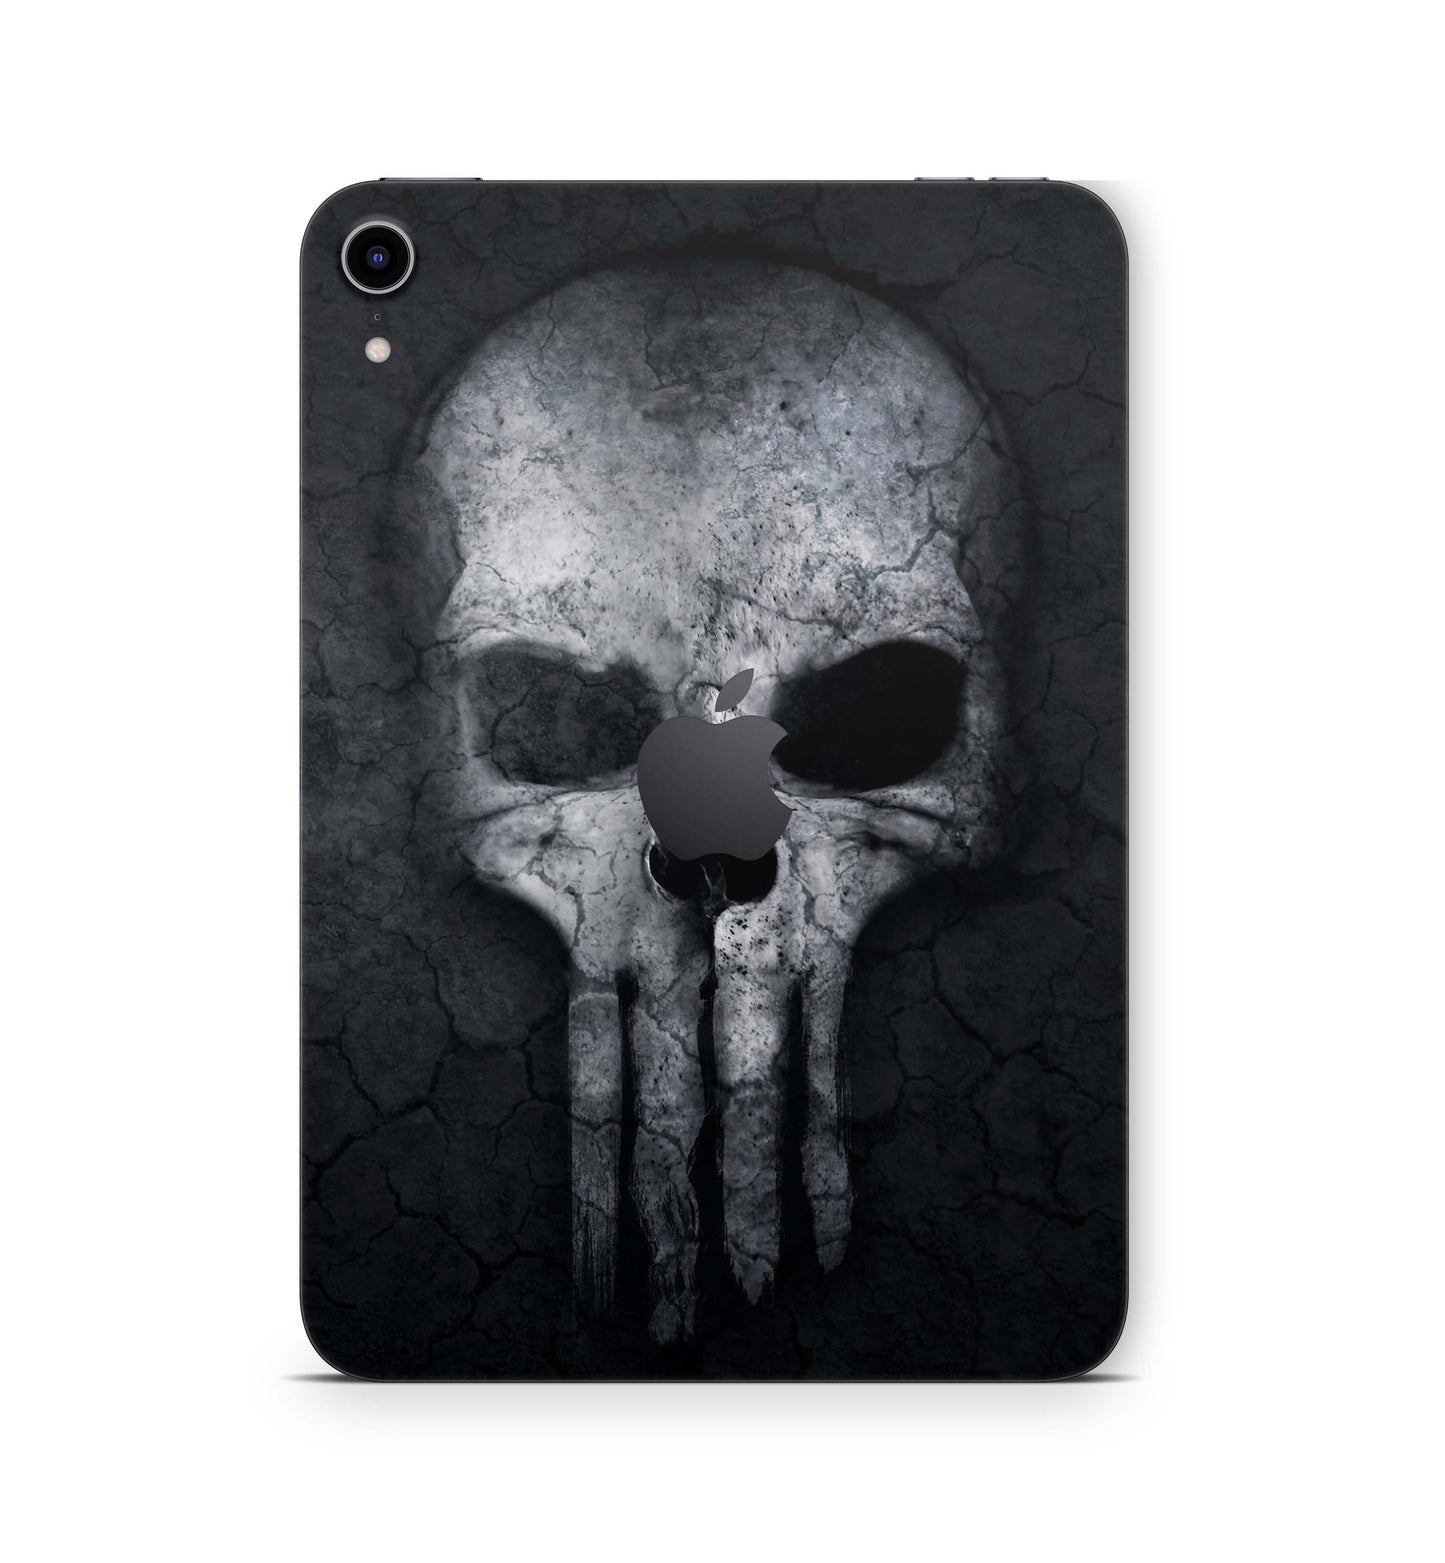 Apple iPad Skin Design Cover Folie Vinyl Skins & Wraps für alle iPad Modelle Aufkleber Skins4u Hard-Skull  